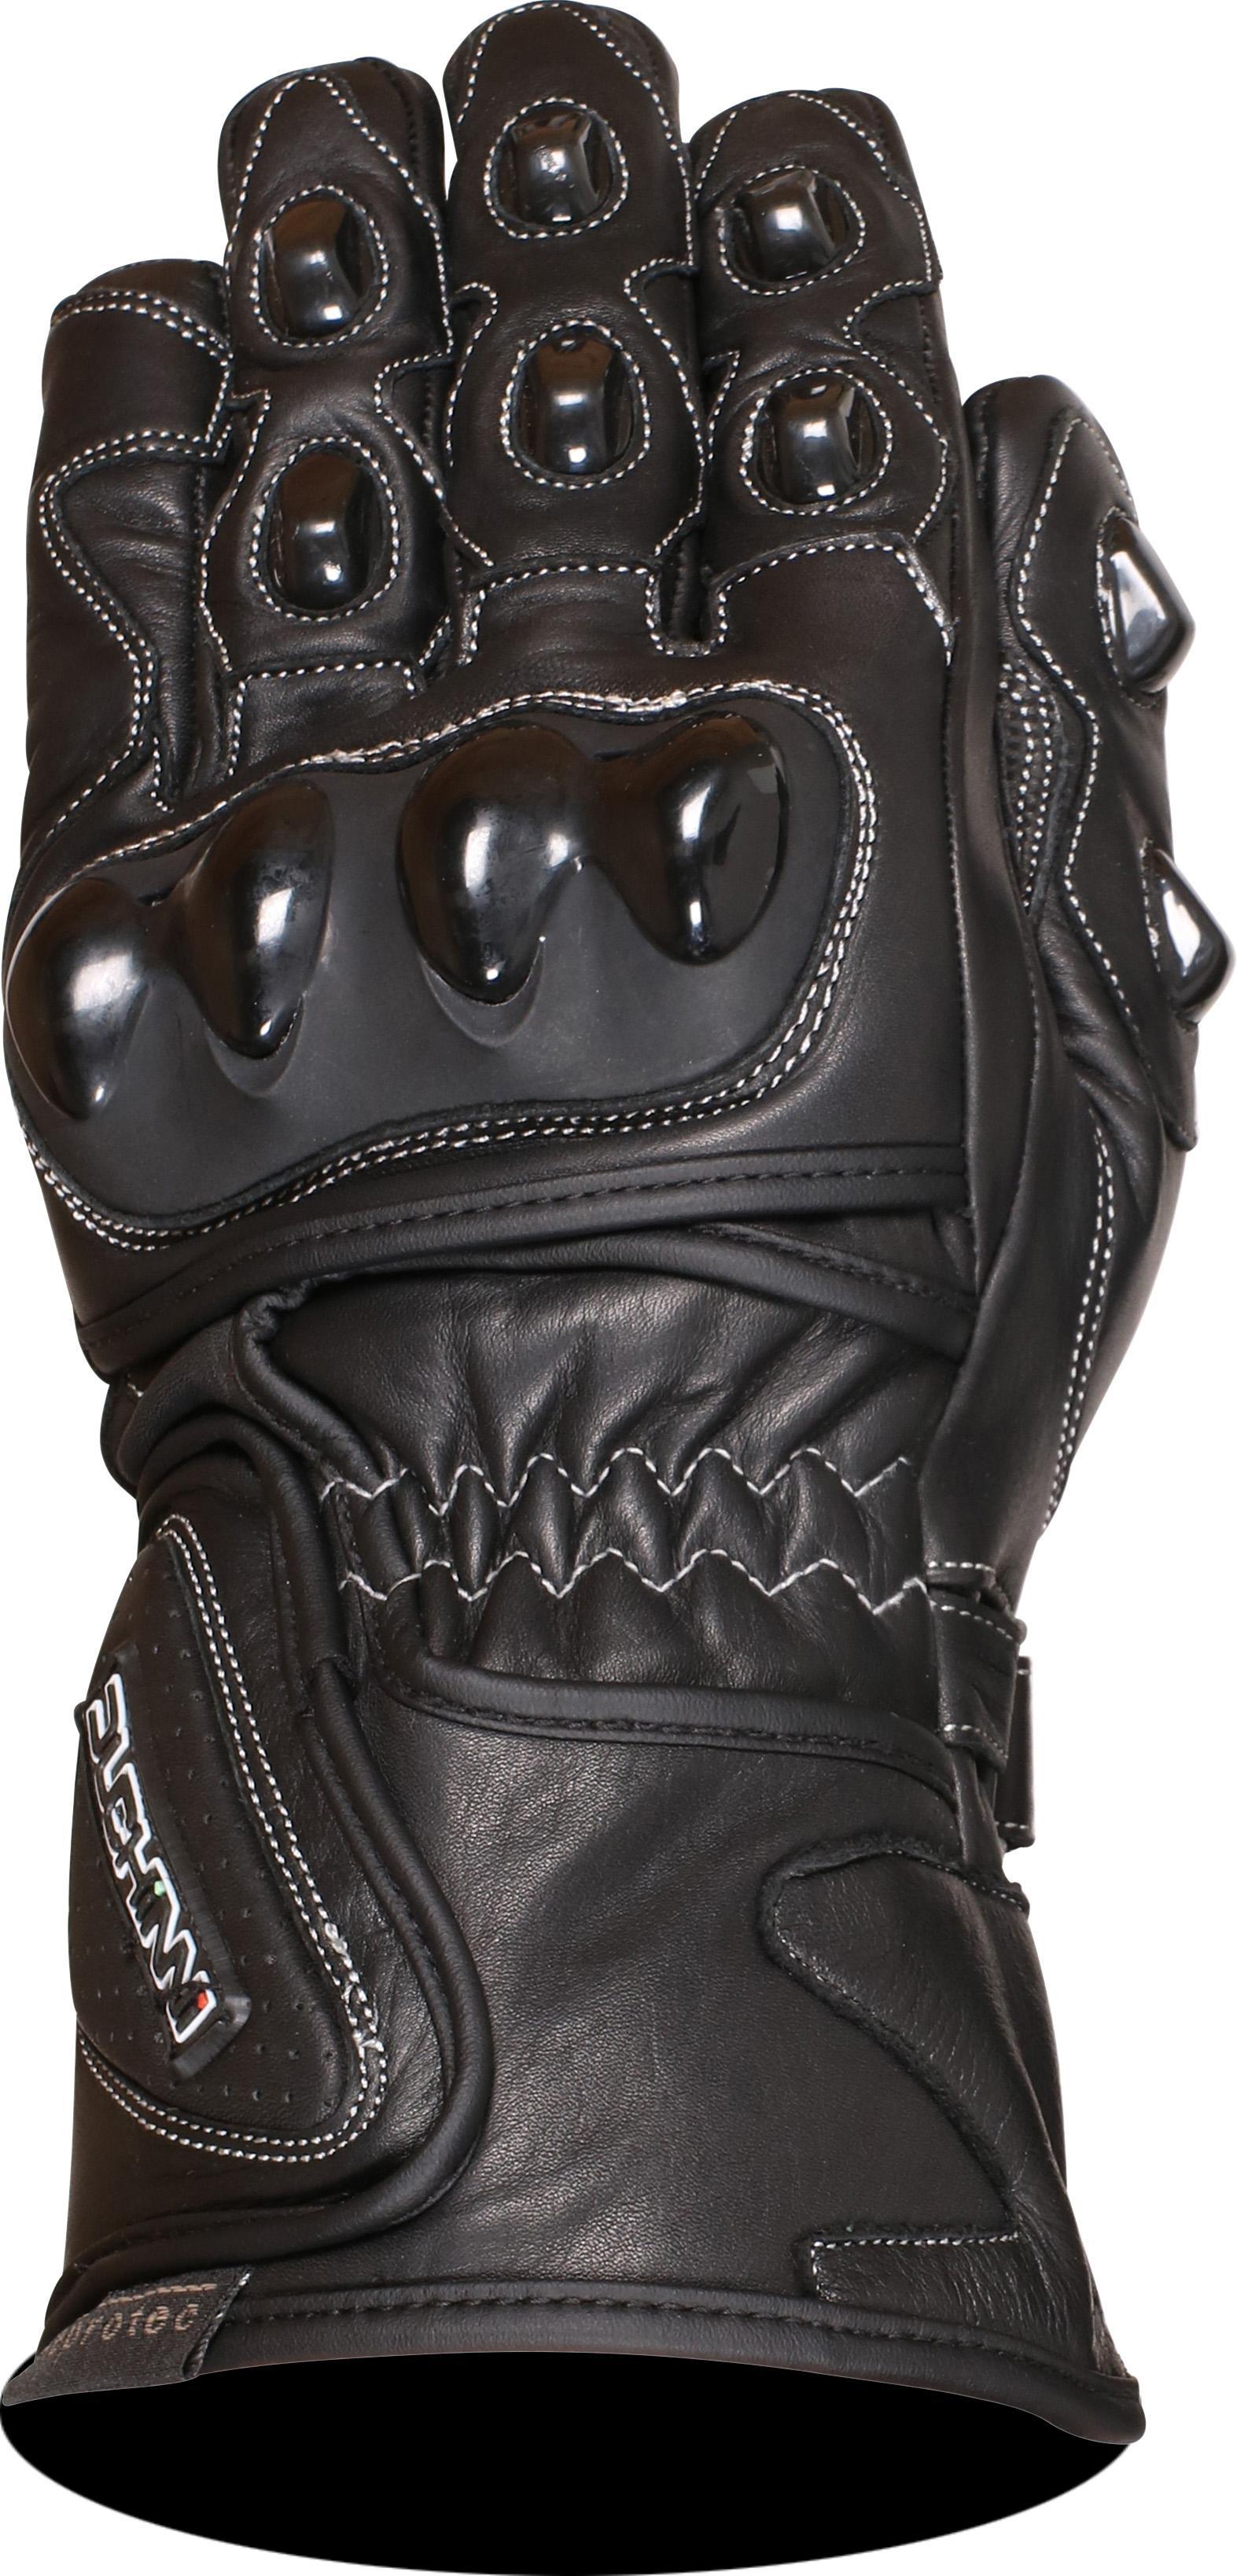 Duchinni Dr1 Motorcycle Gloves - Black, M